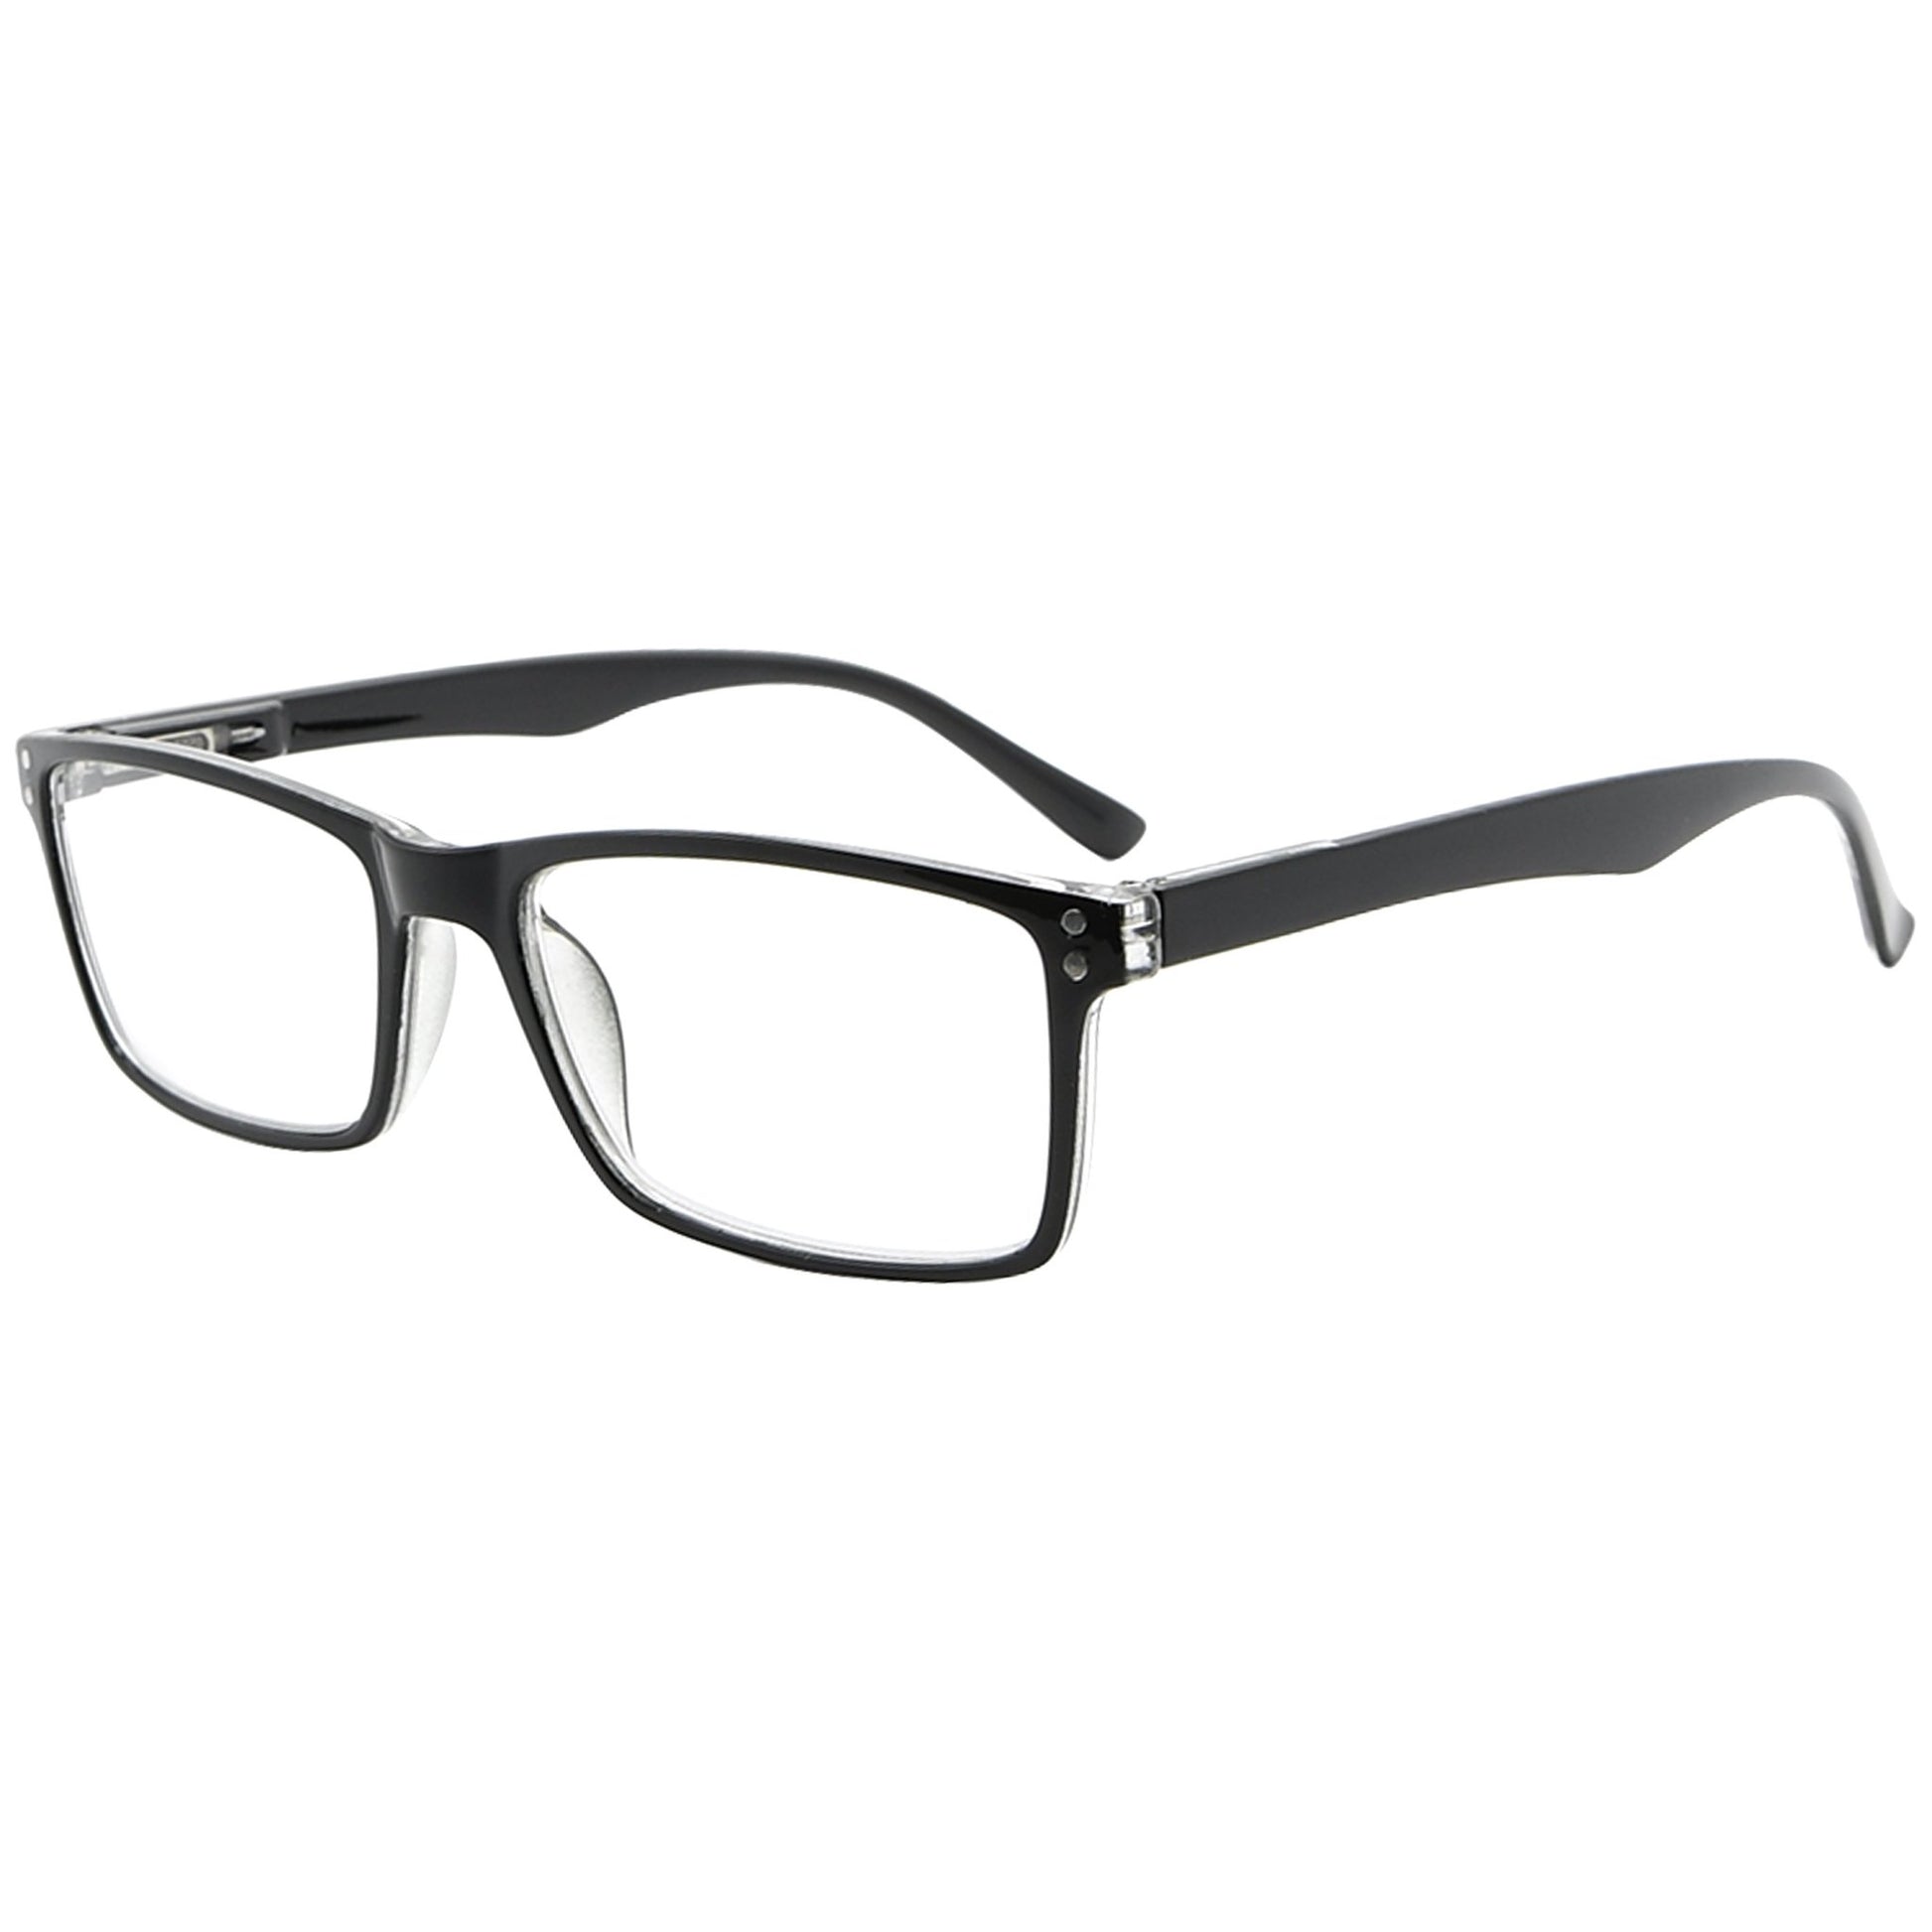 Vintage Stylish Reading Glasses Black R802-A